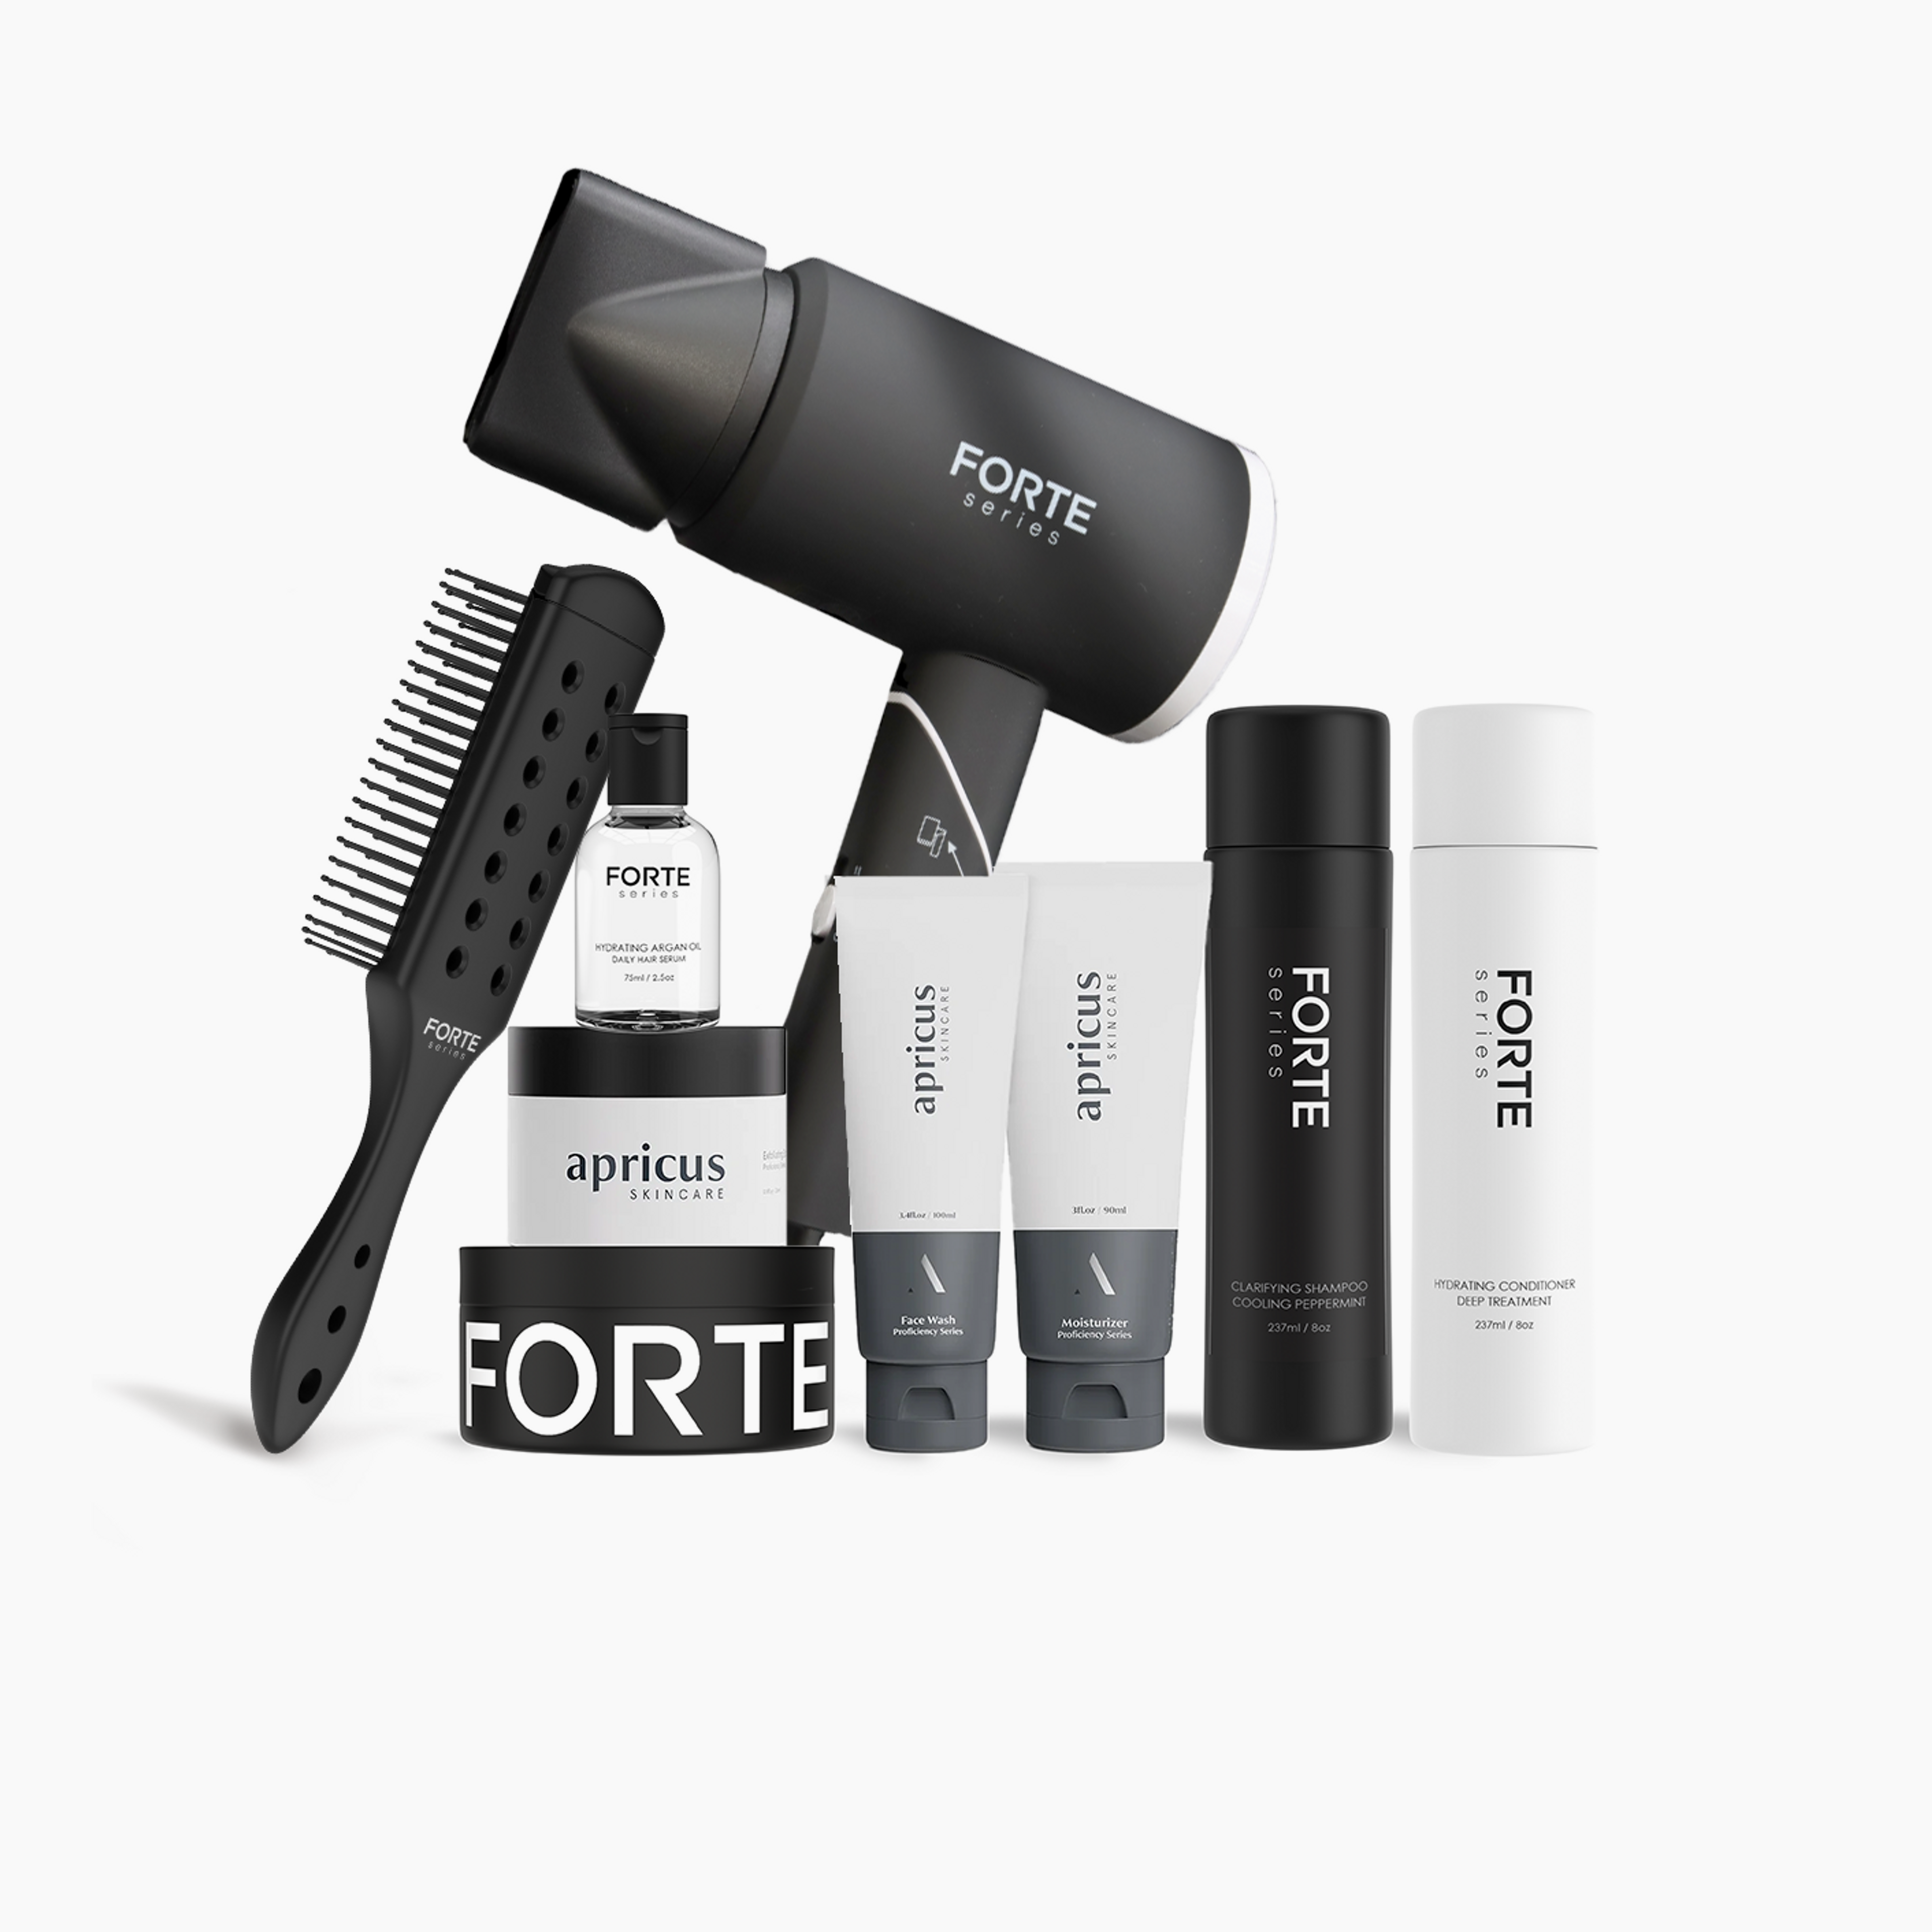 Forte Complete Grooming kit